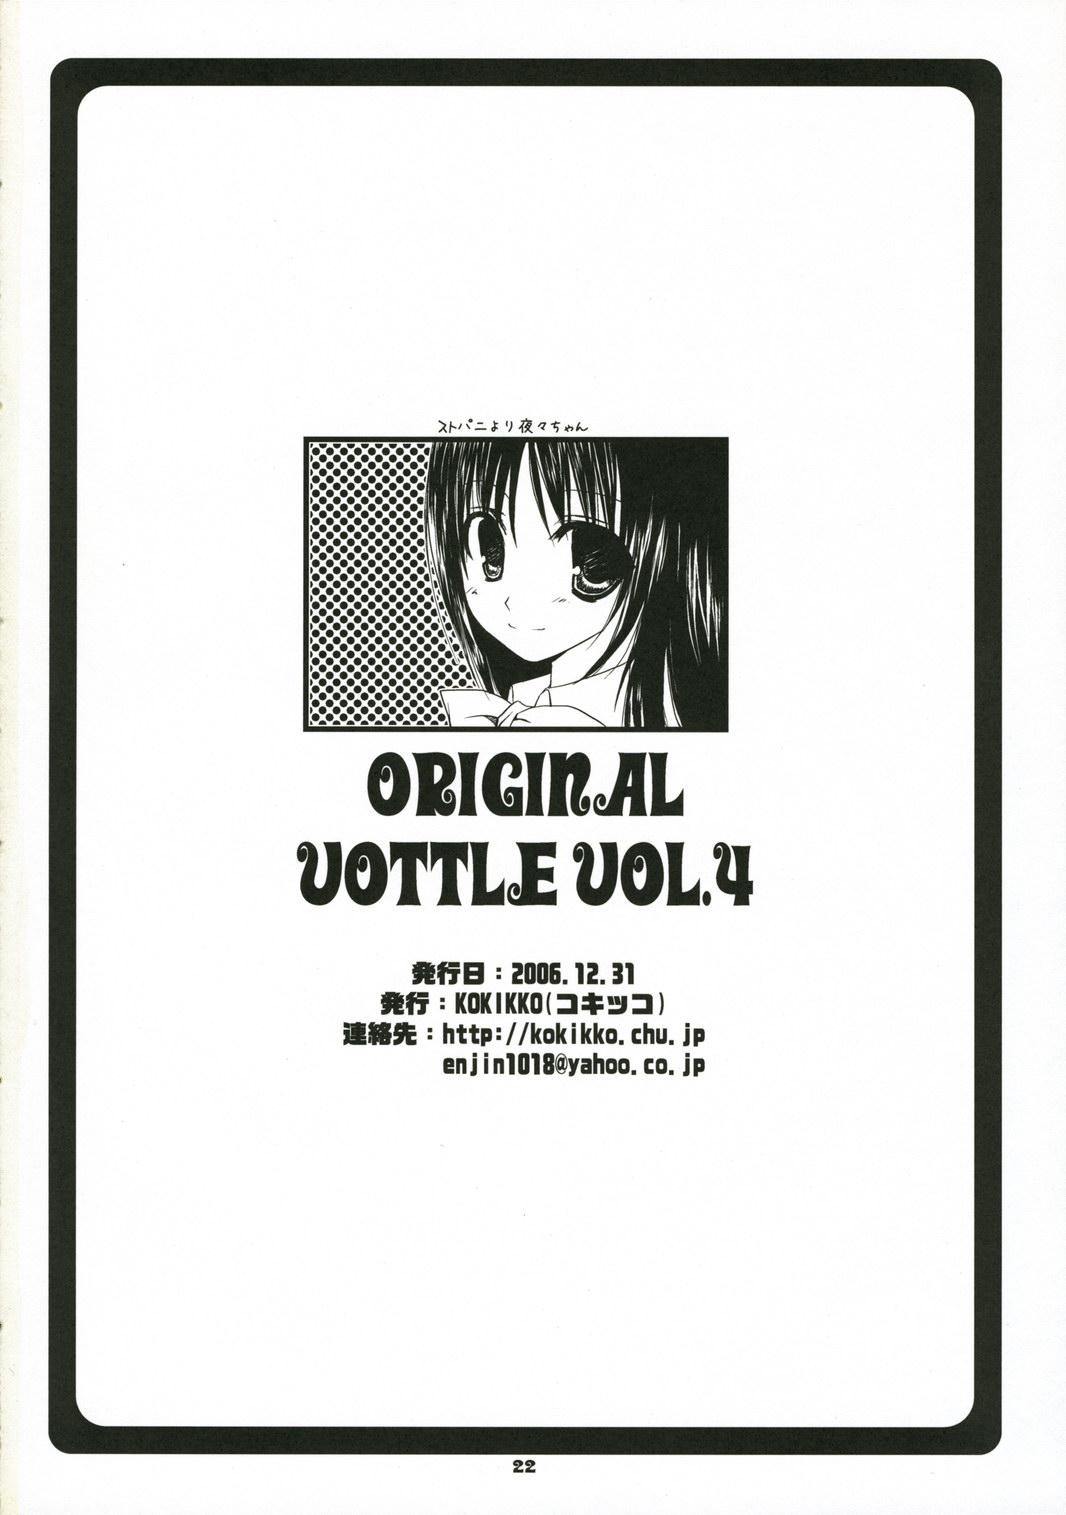 Original Bottle Vol. 4 20